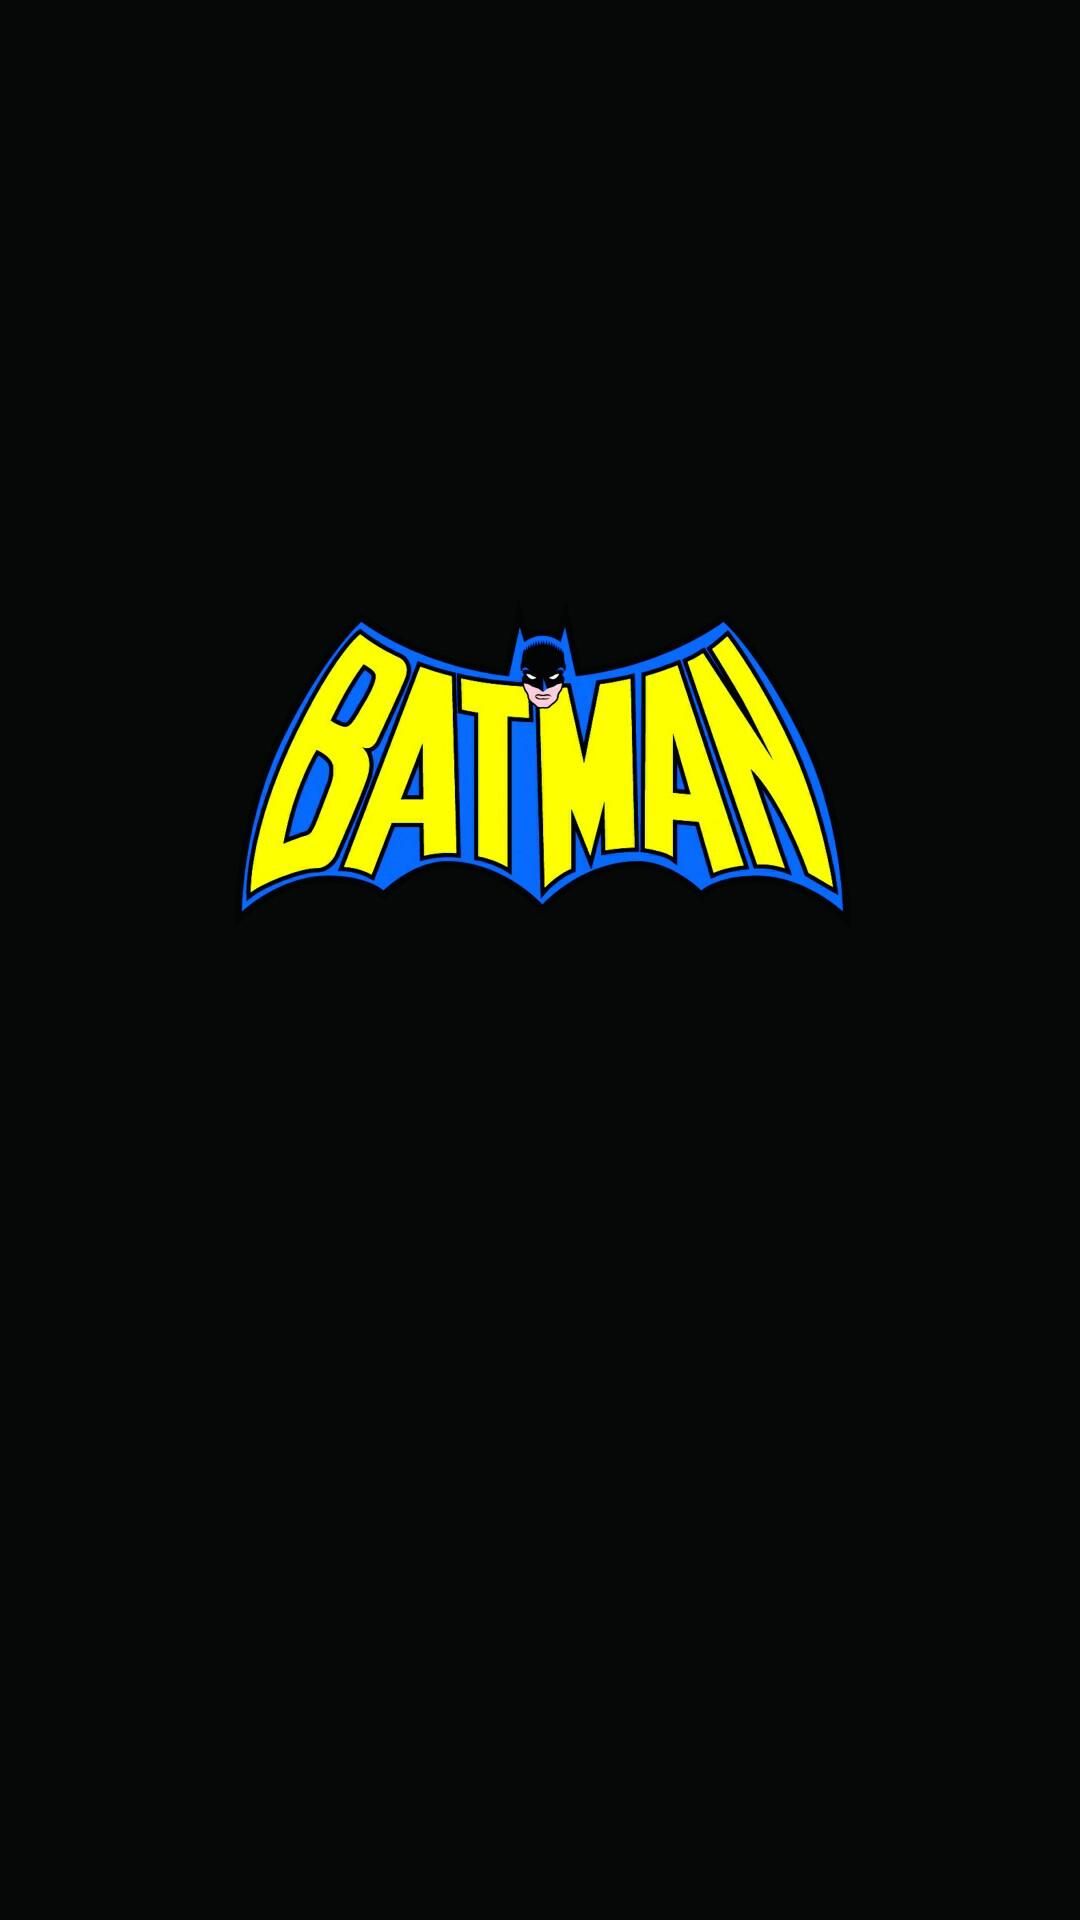 Batman Iphone Wallpaper